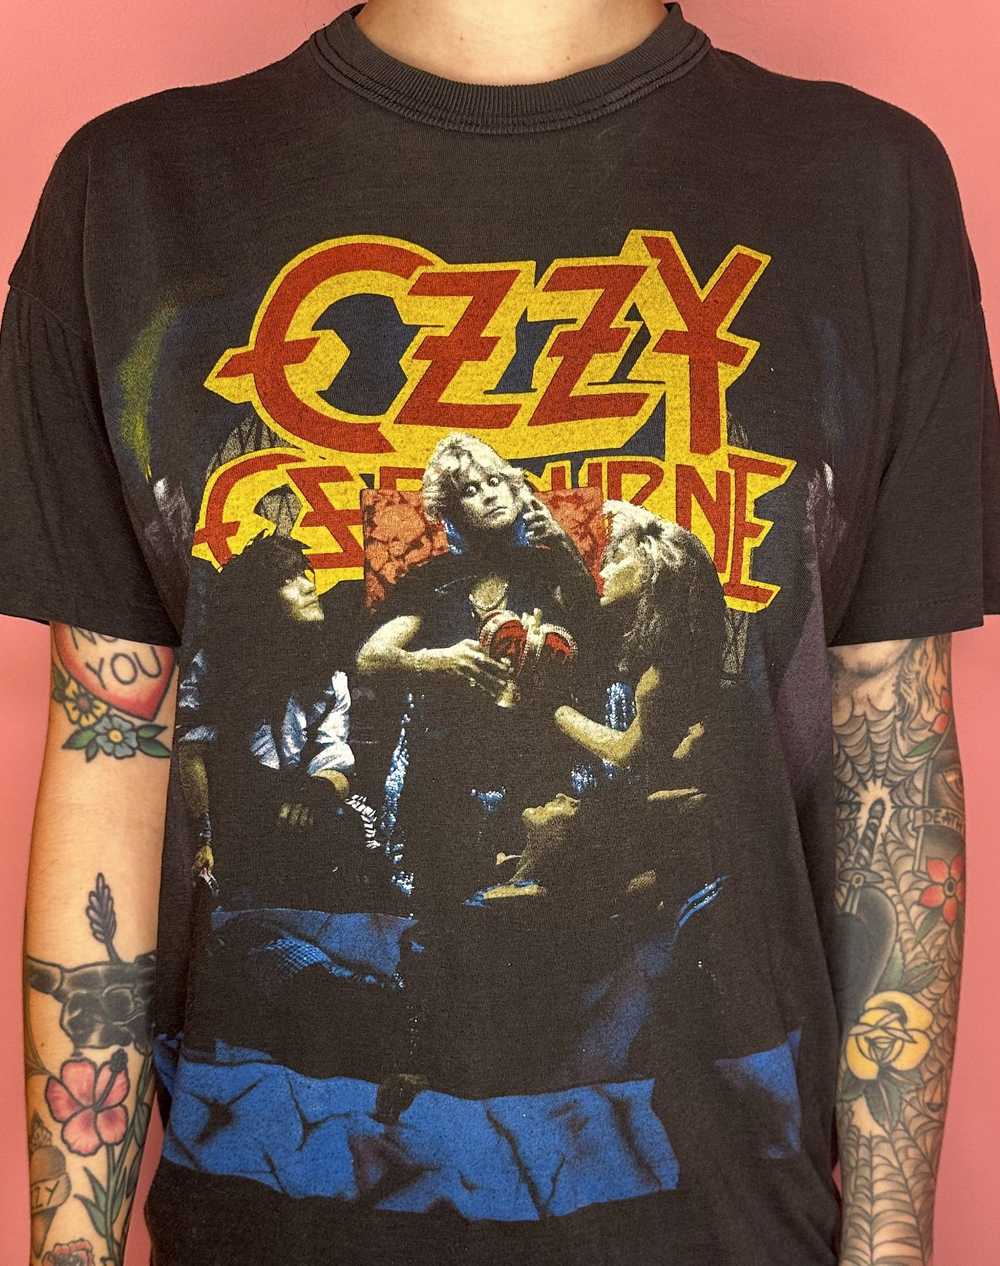 Band Tees Ozzy Osbourne 1984 Tour shirt - image 1